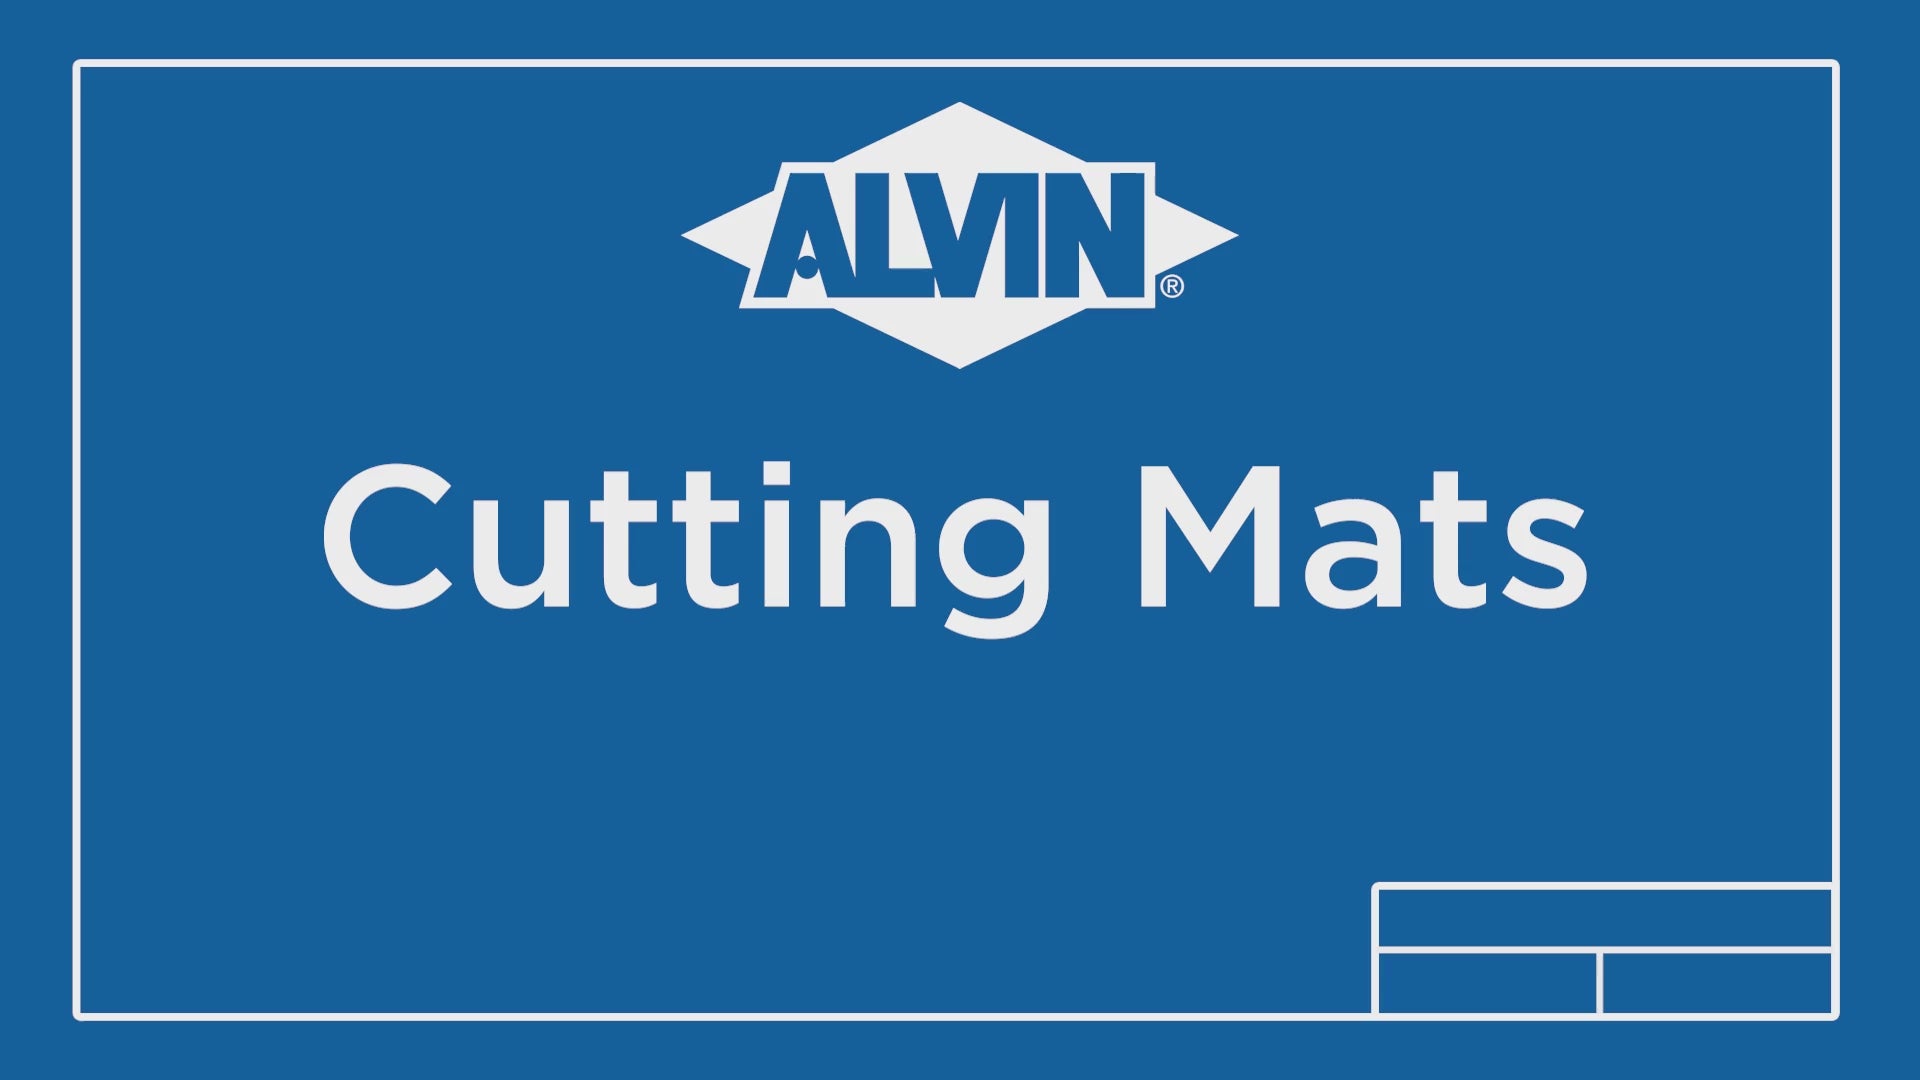 Alvin Professional Self-Healing Cutting Mat 36 x 48 - Green/Black